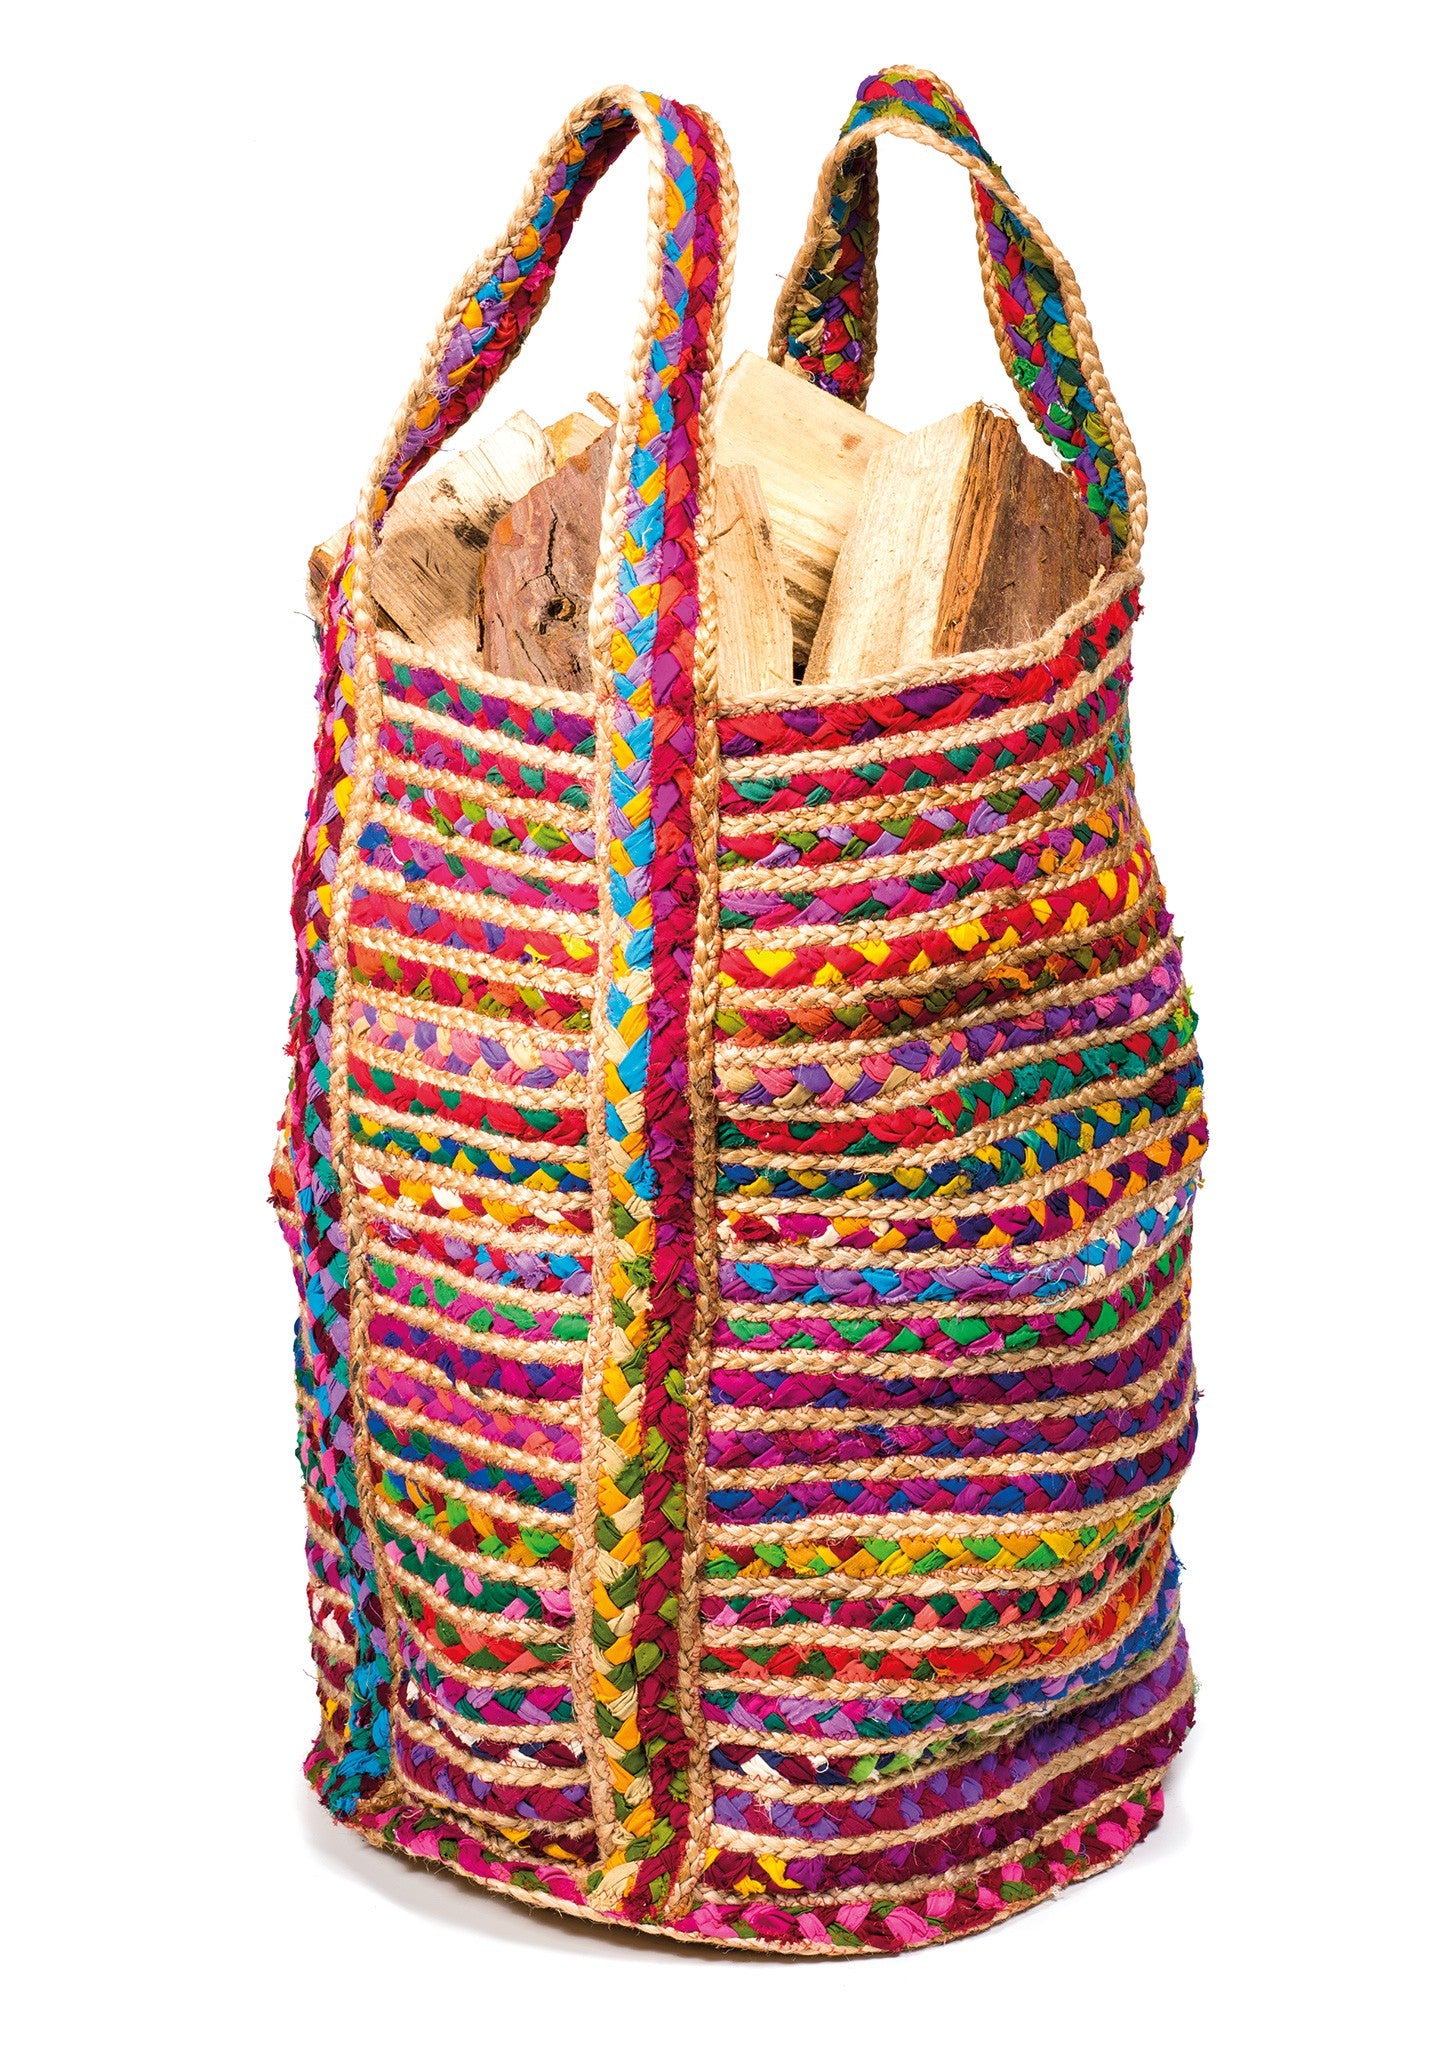 Buy Handmakers-Jute Hand Bag With Chindi Strip Hand Made Jute Bag at  Amazon.in